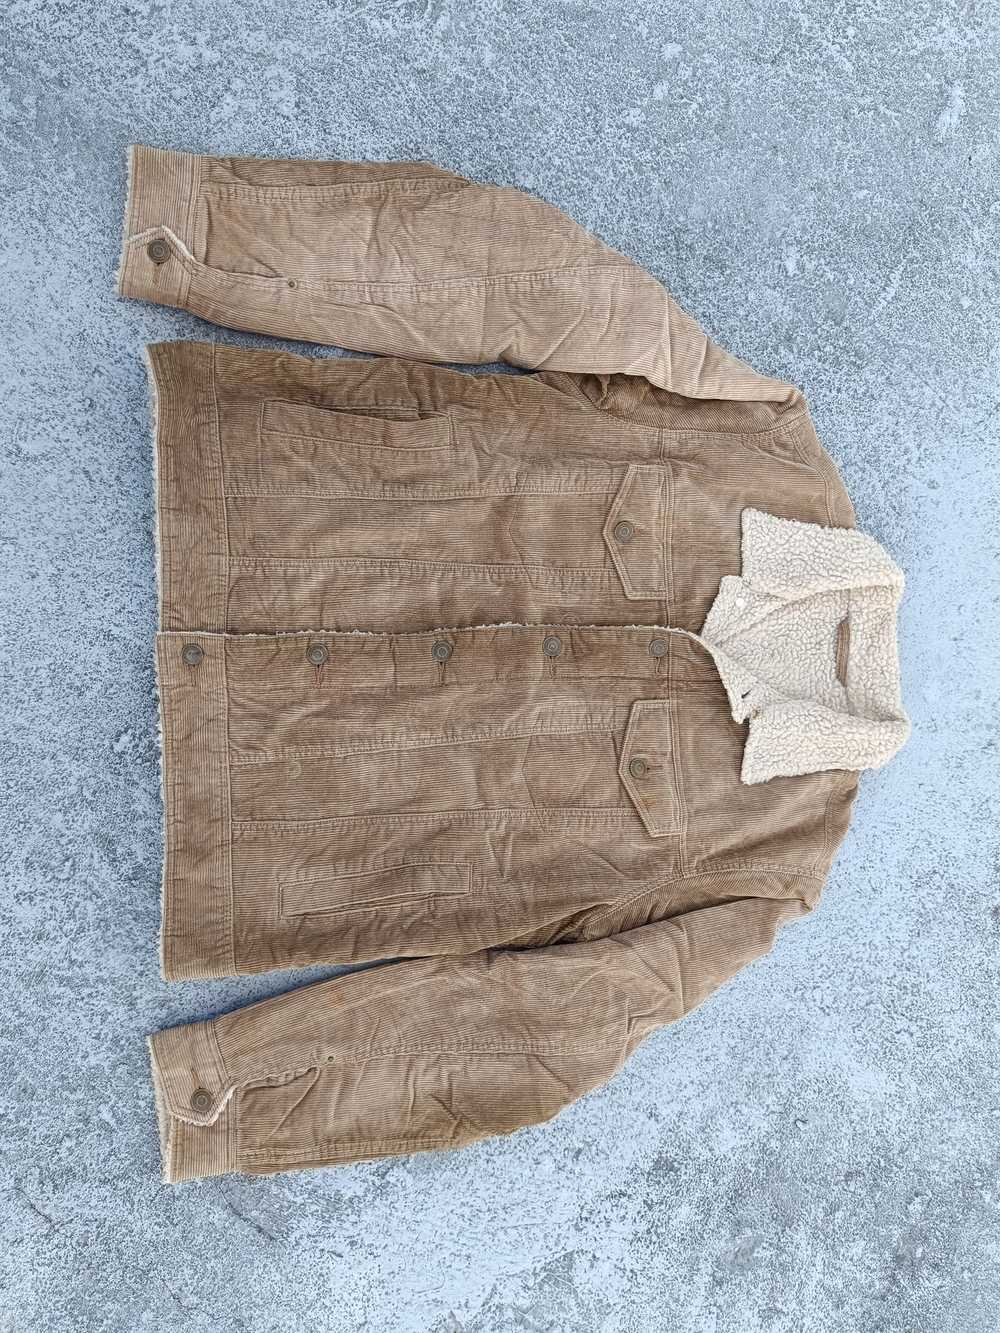 Corduroi Club × GU × Streetwear GU corduroi jacket - image 1